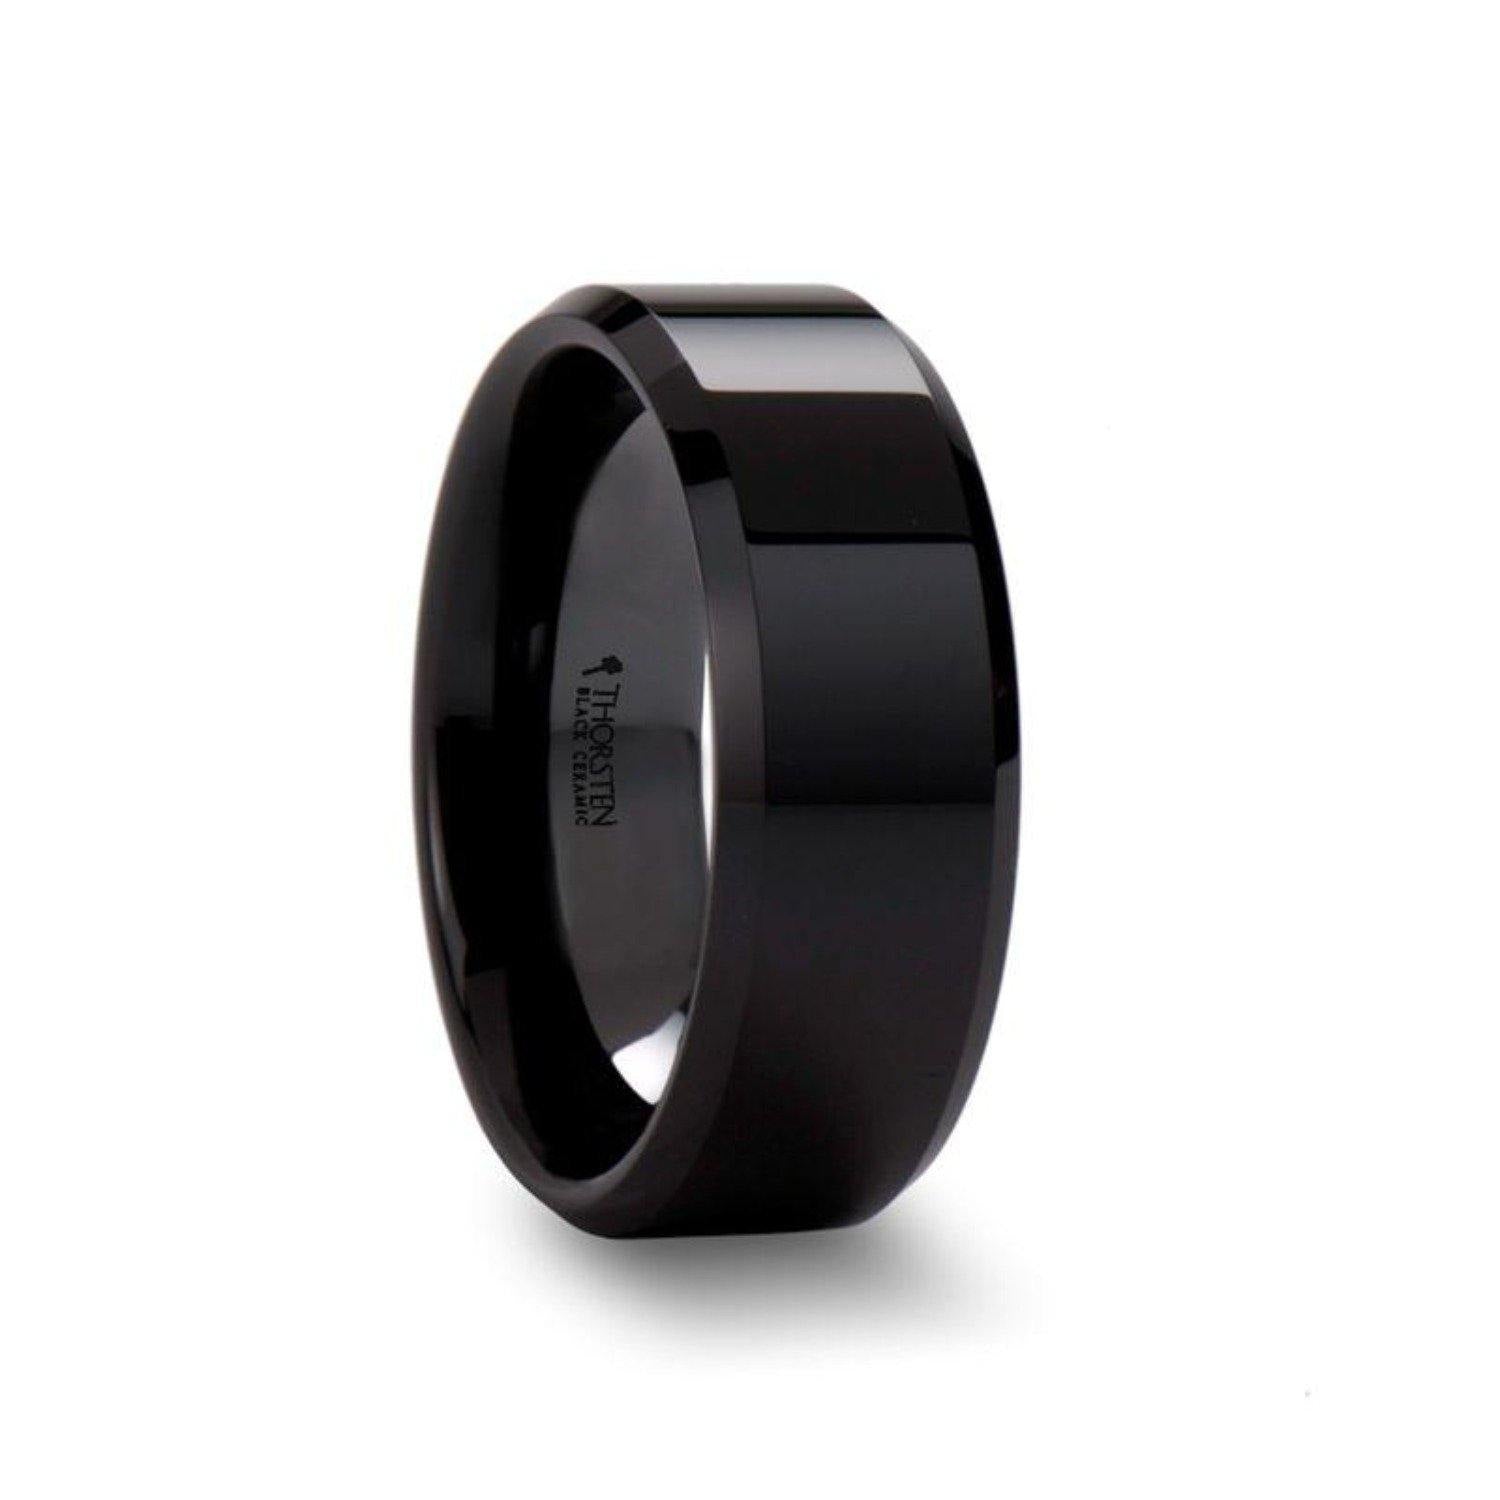 CITAR - Polished Finish Black Ceramic Ring with Beveled Edges - 4mm - 12mm - The Rutile Ltd